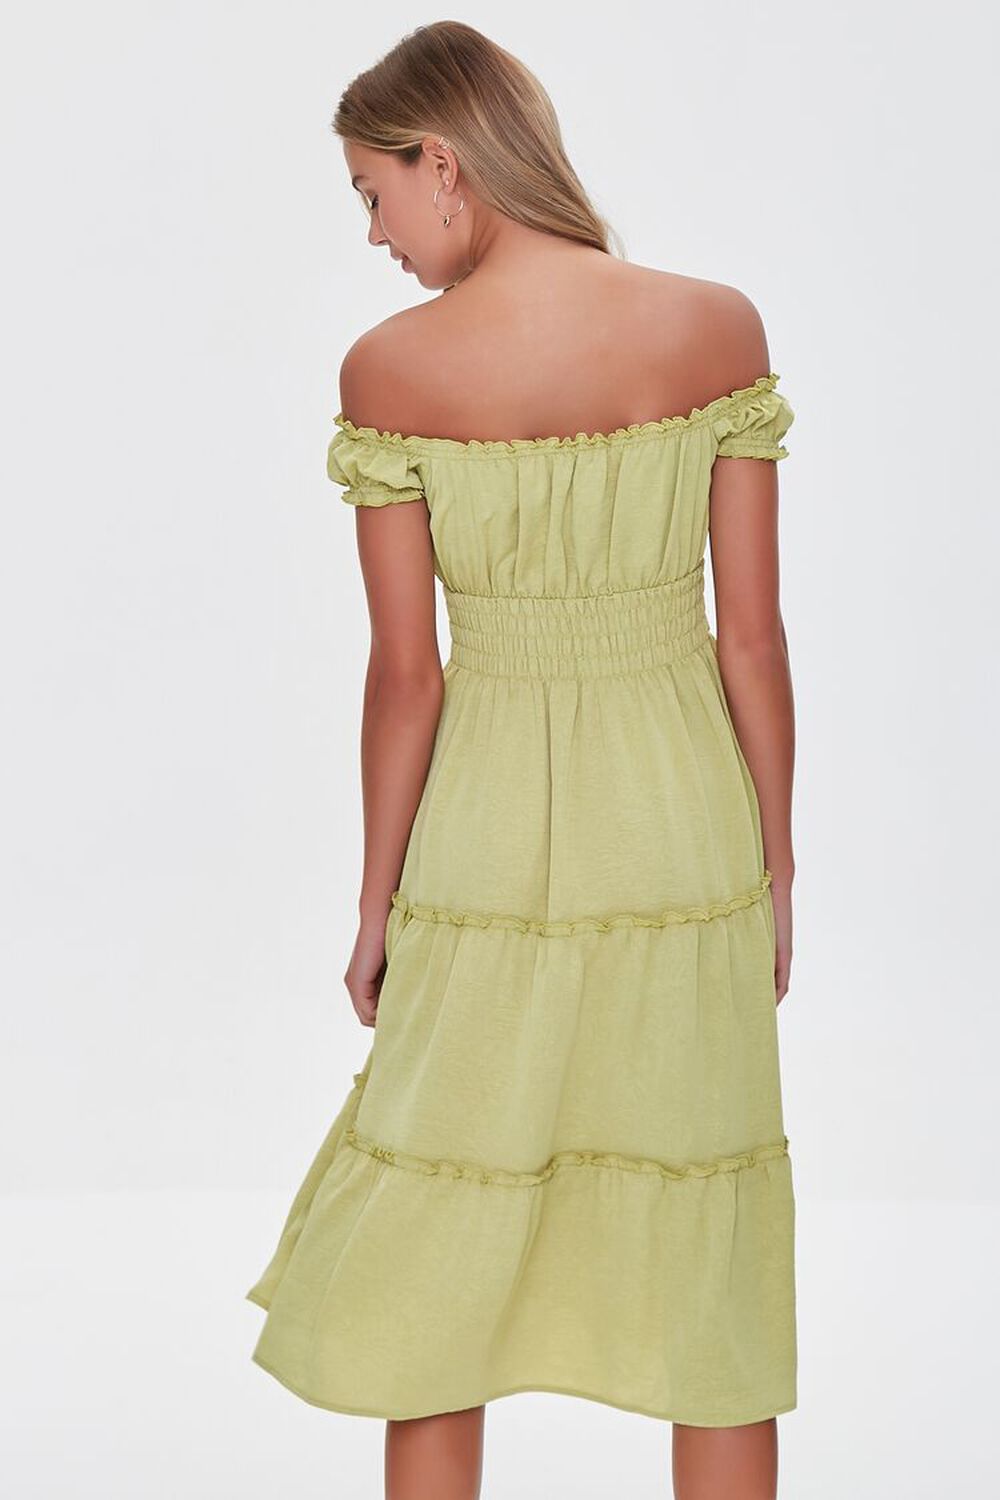 CITRON Off-the-Shoulder Tiered Dress, image 3